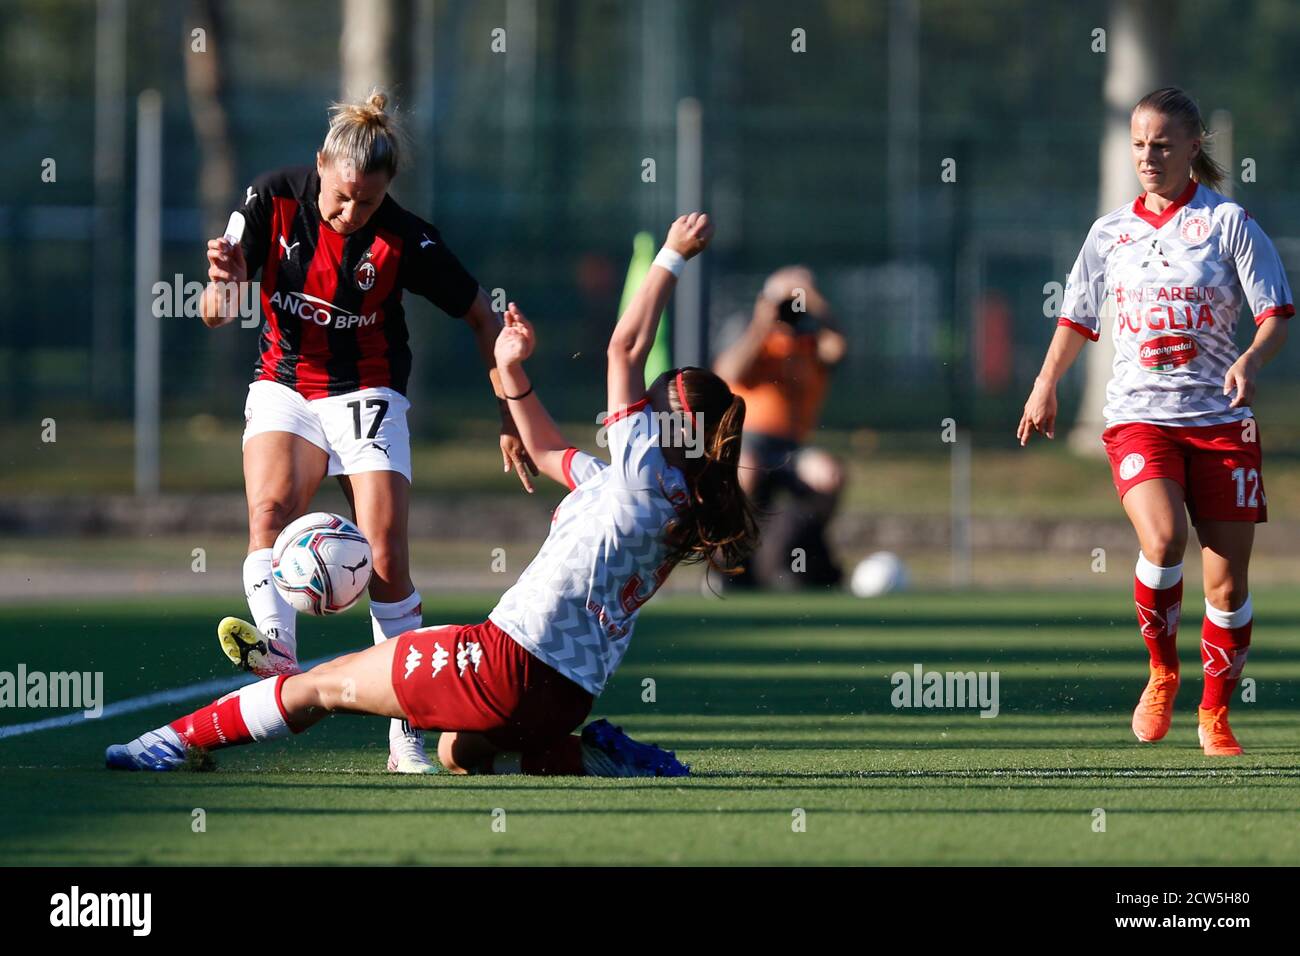 Dominica Conc (AC Mailand) während AC Mailand vs Pink Bari, Italienische Fußball Serie A Frauen Meisterschaft, Mailand, Italien, 05 September 2020 Stockfoto